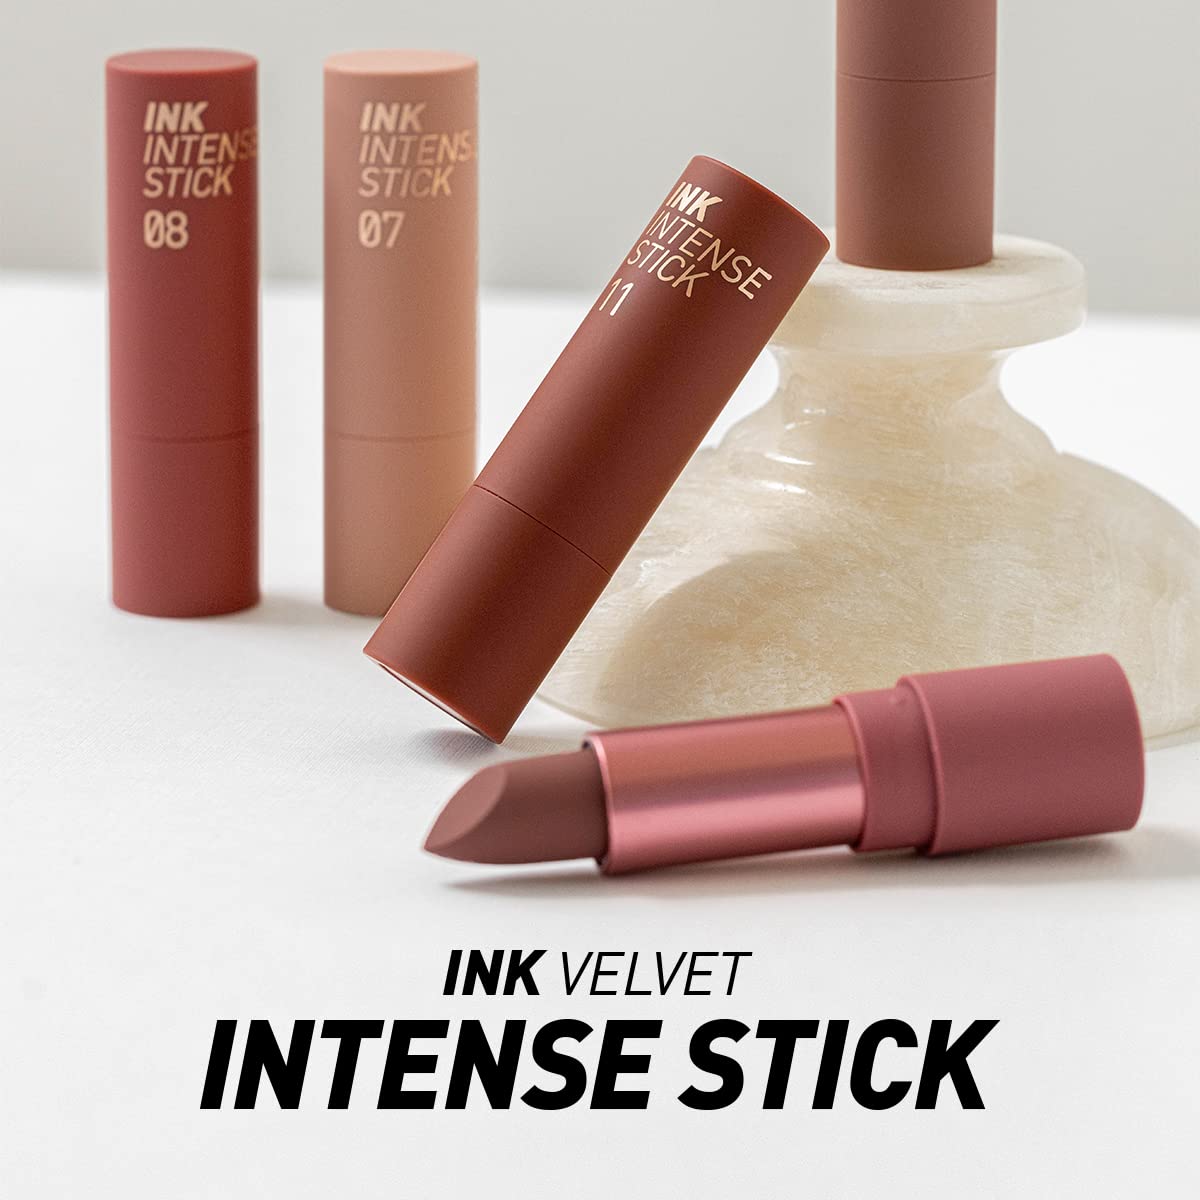 Peripera Ink Velvet Intense Stick #08 Odd Rose